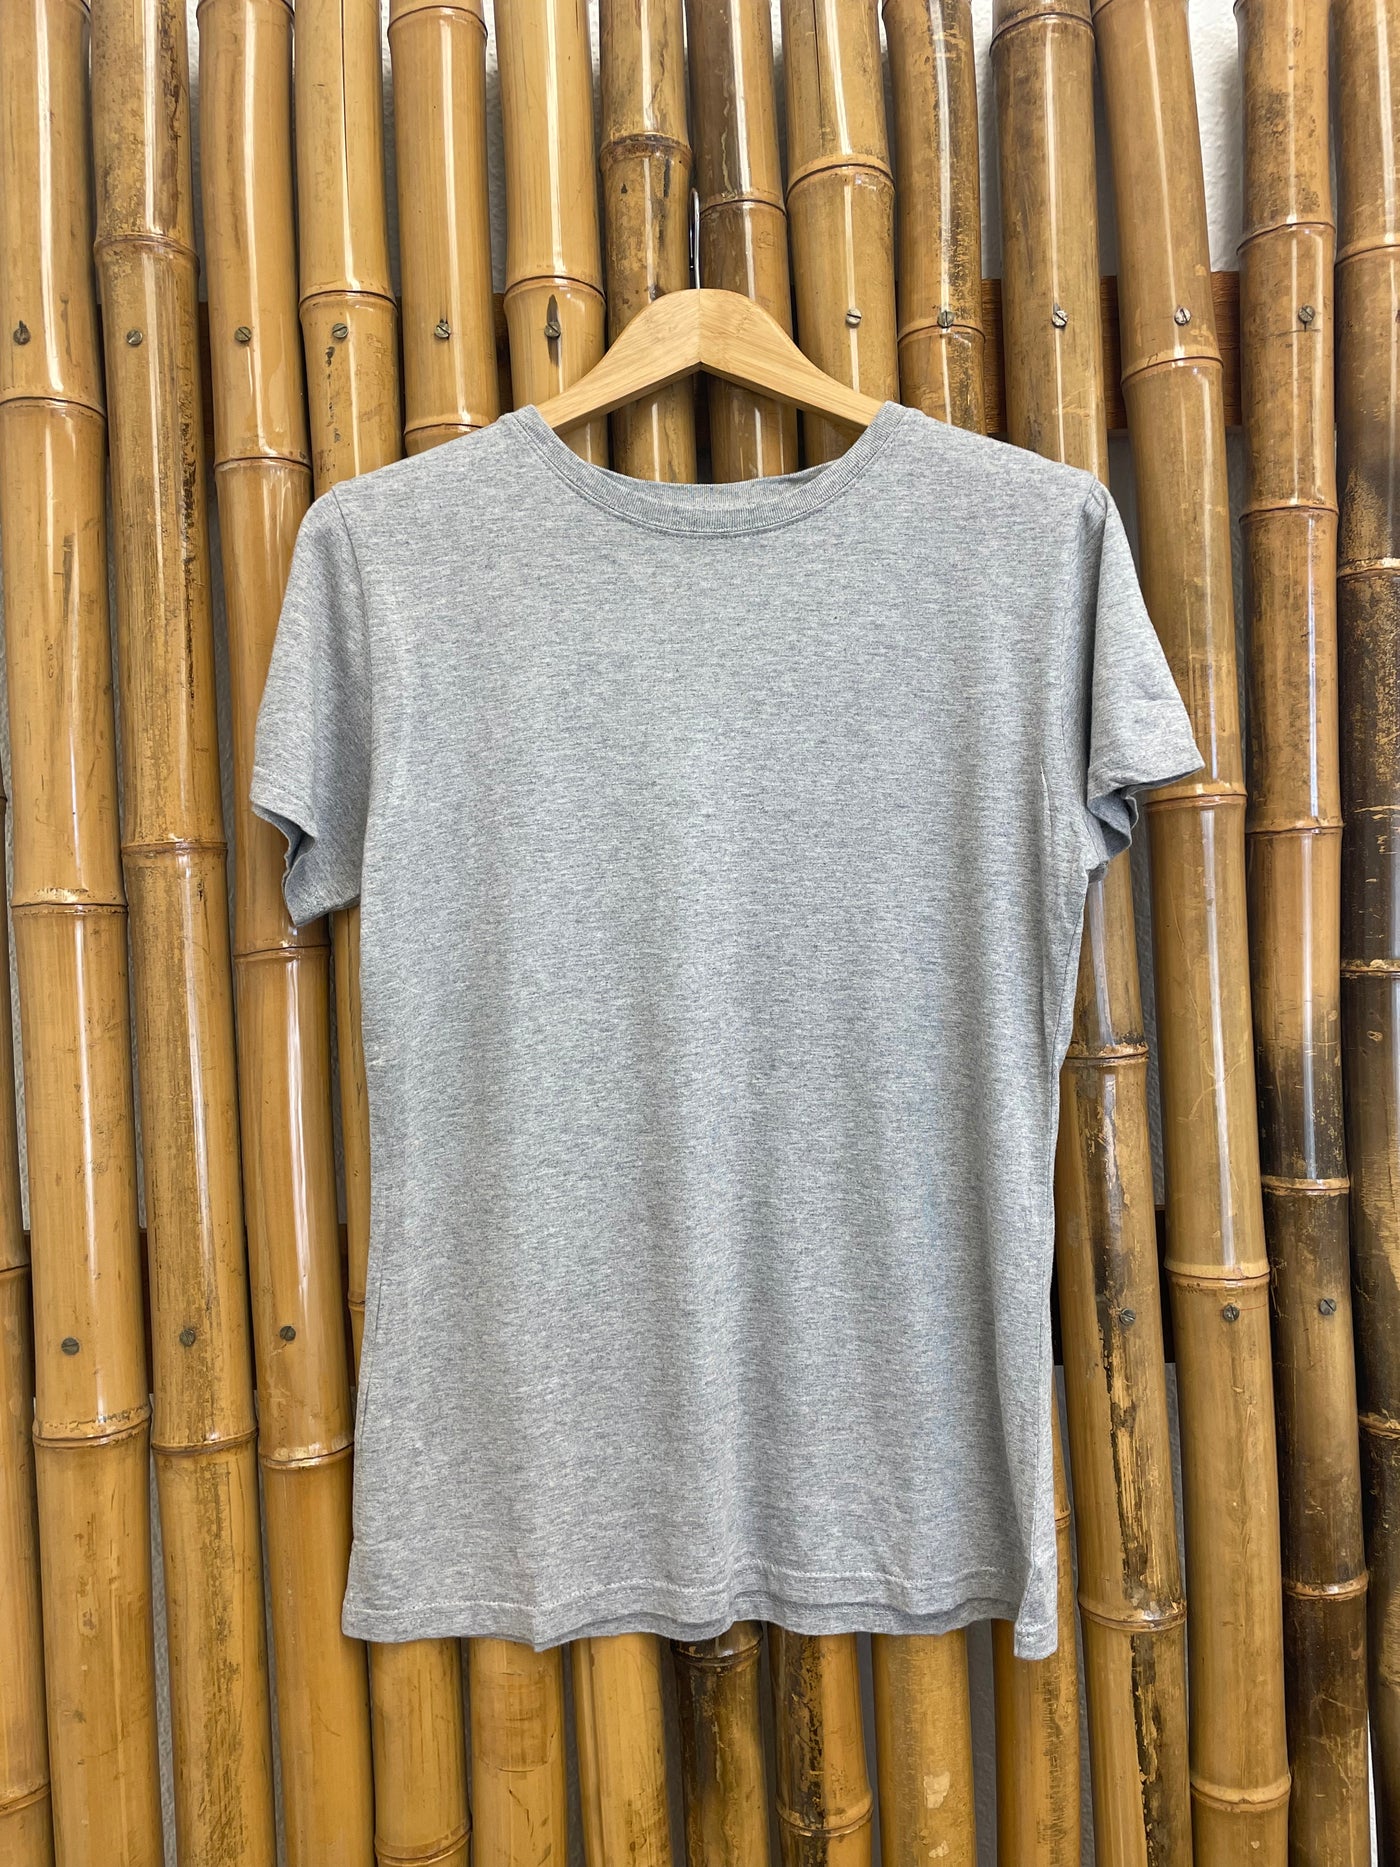 Clearance Spun Bamboo Women's Bamboo/Cotton Short Sleeve Crew Neck T-Shirt - Heather Grey